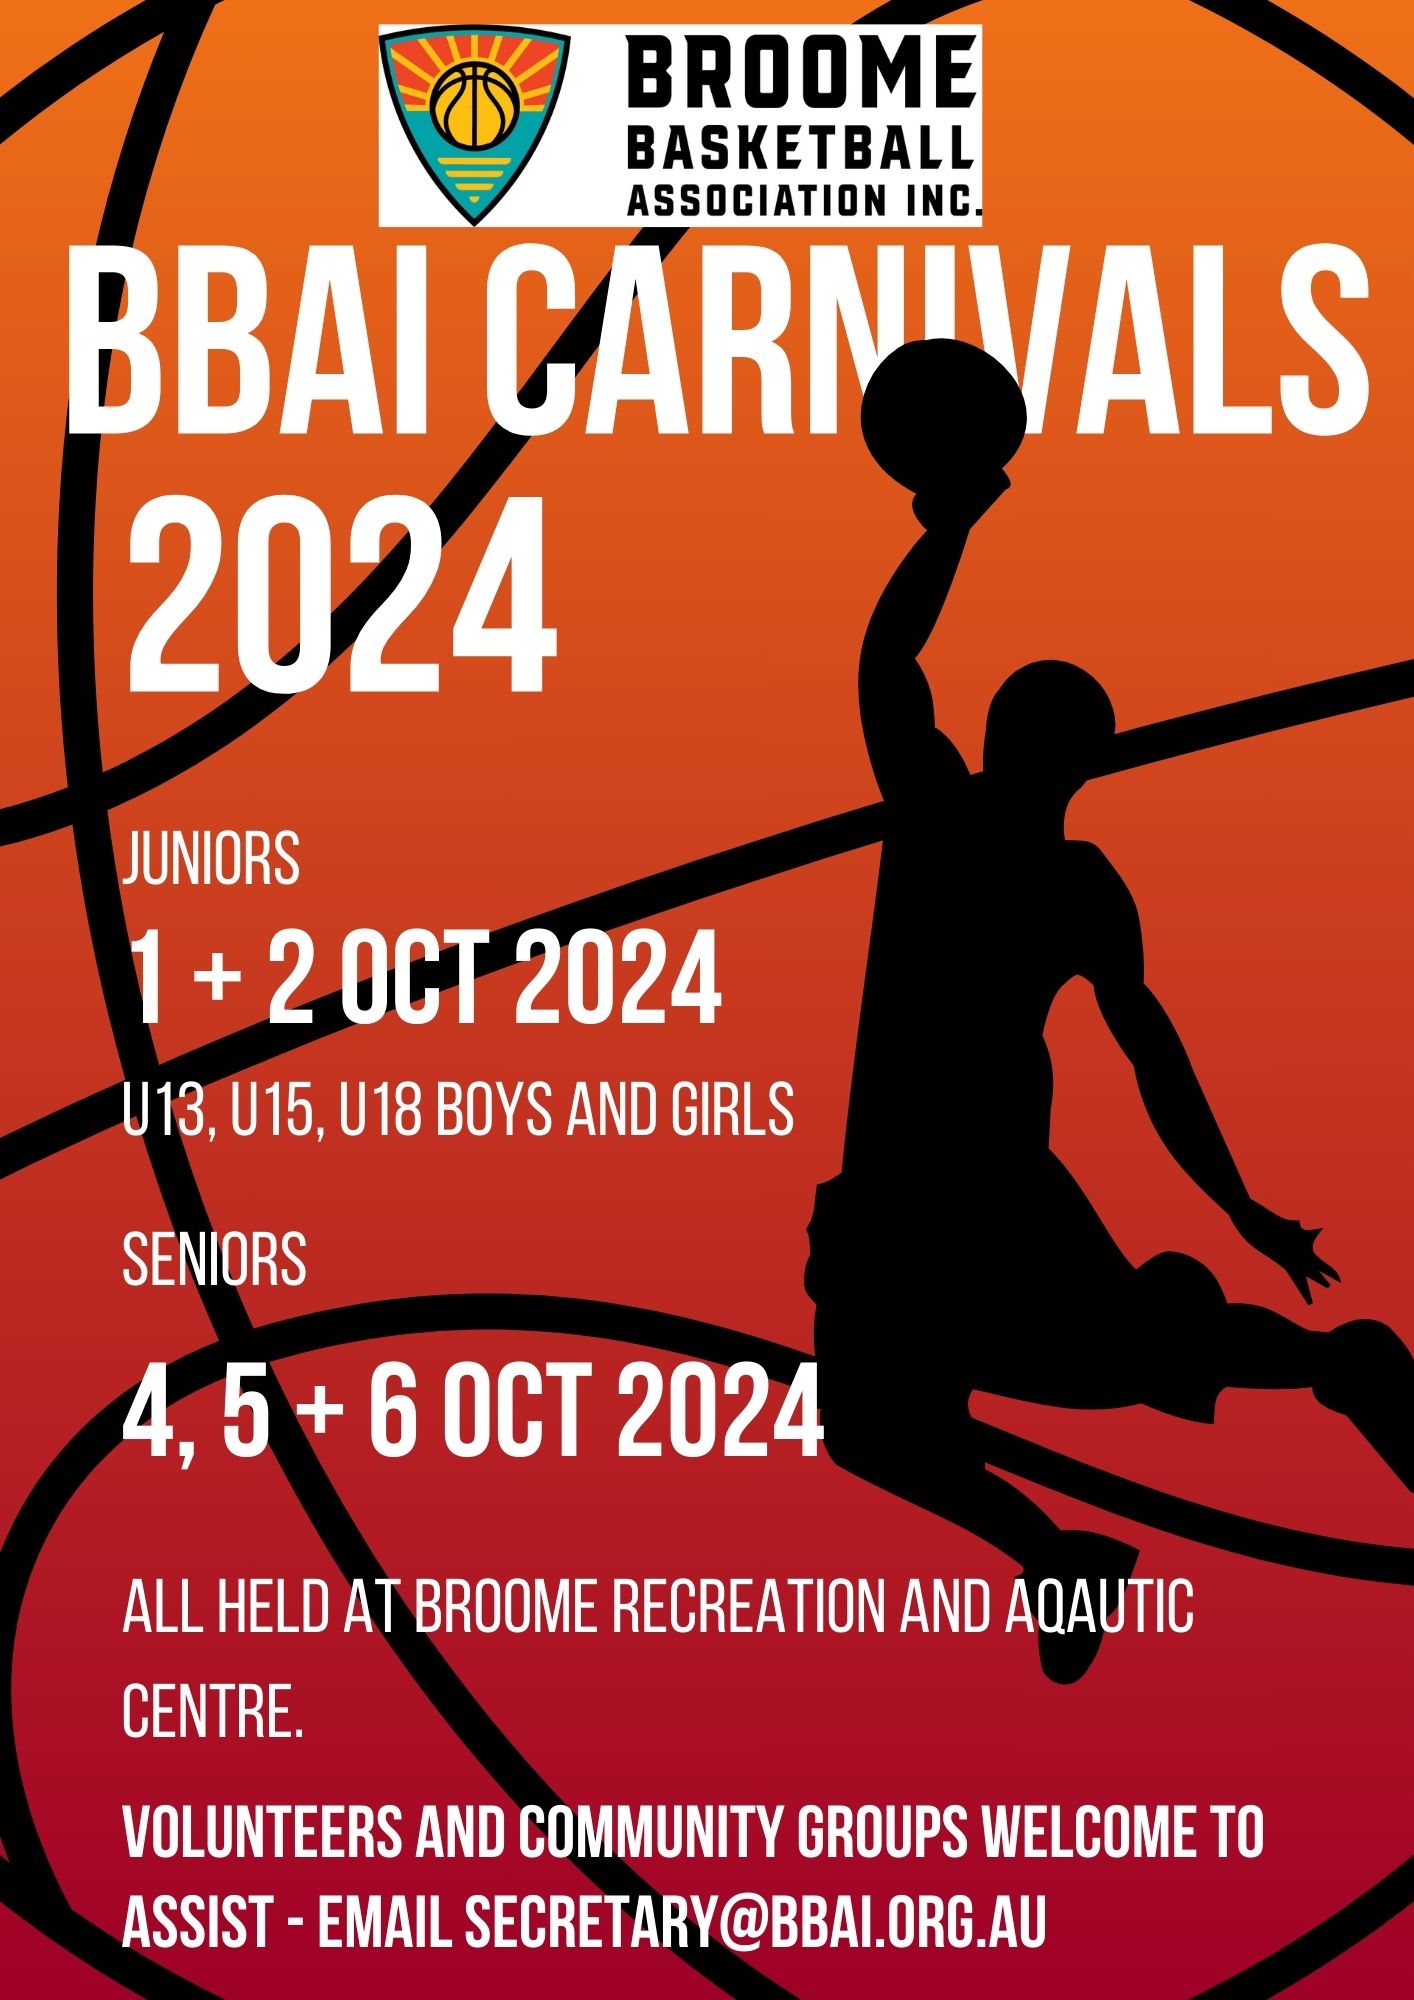 BBAI Carnivals 2024 date advertisement.jpg